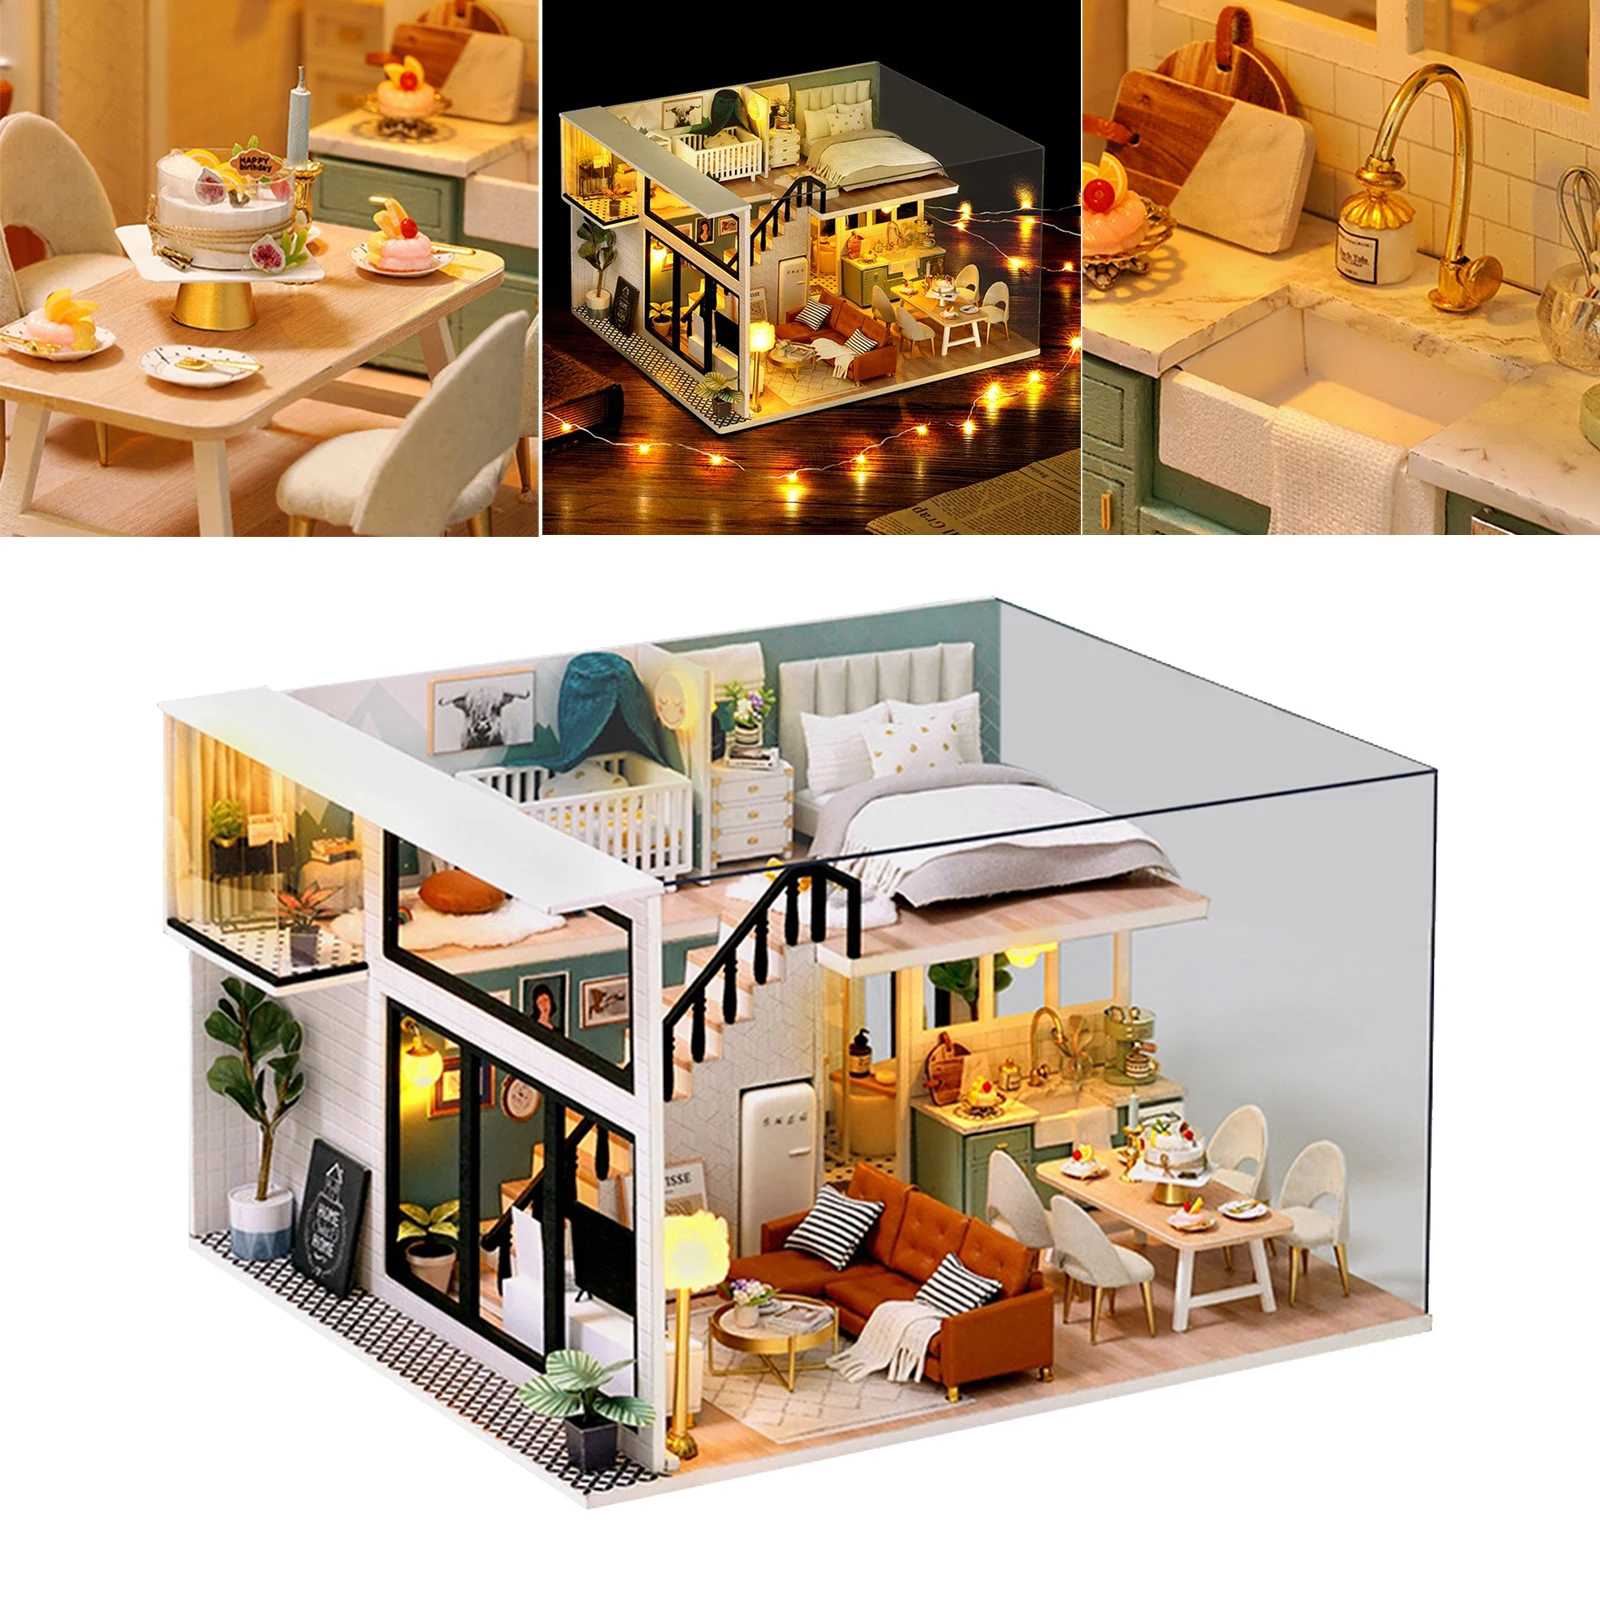 Miniature Dolls House Kit with Furniture, DIY Miniature House Model Kits,